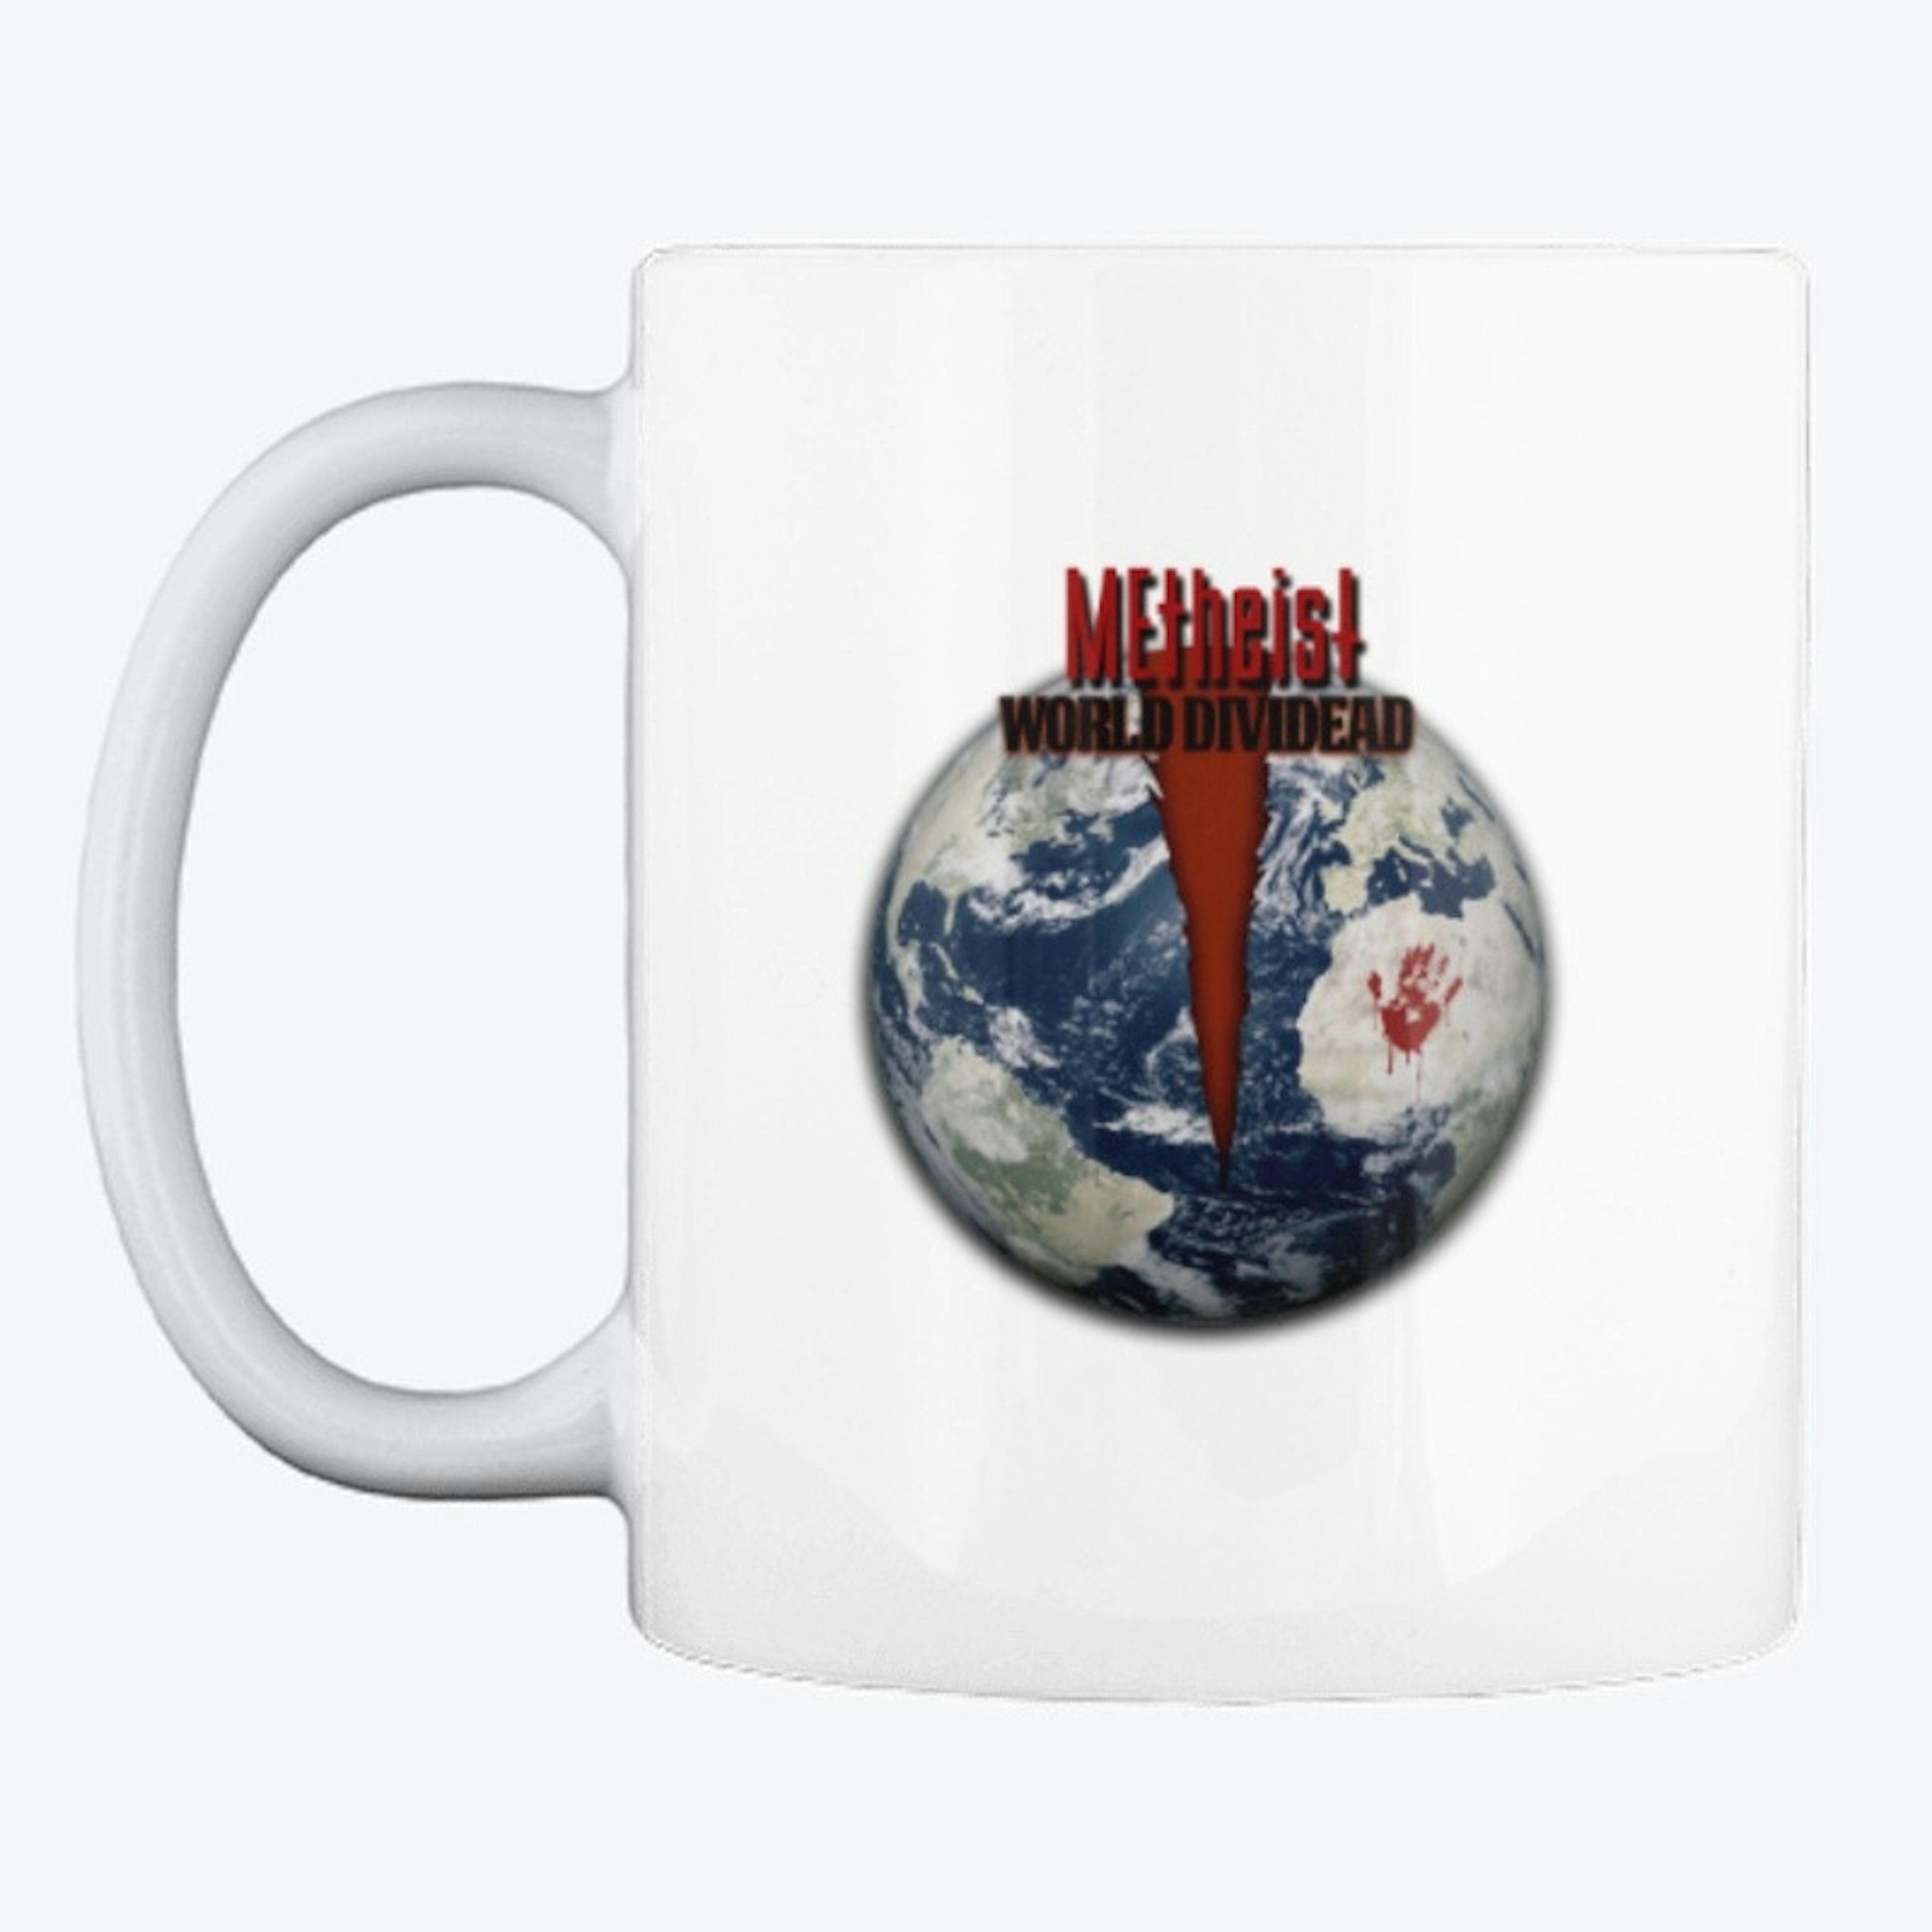 MEtheist - World DiviDead Mug